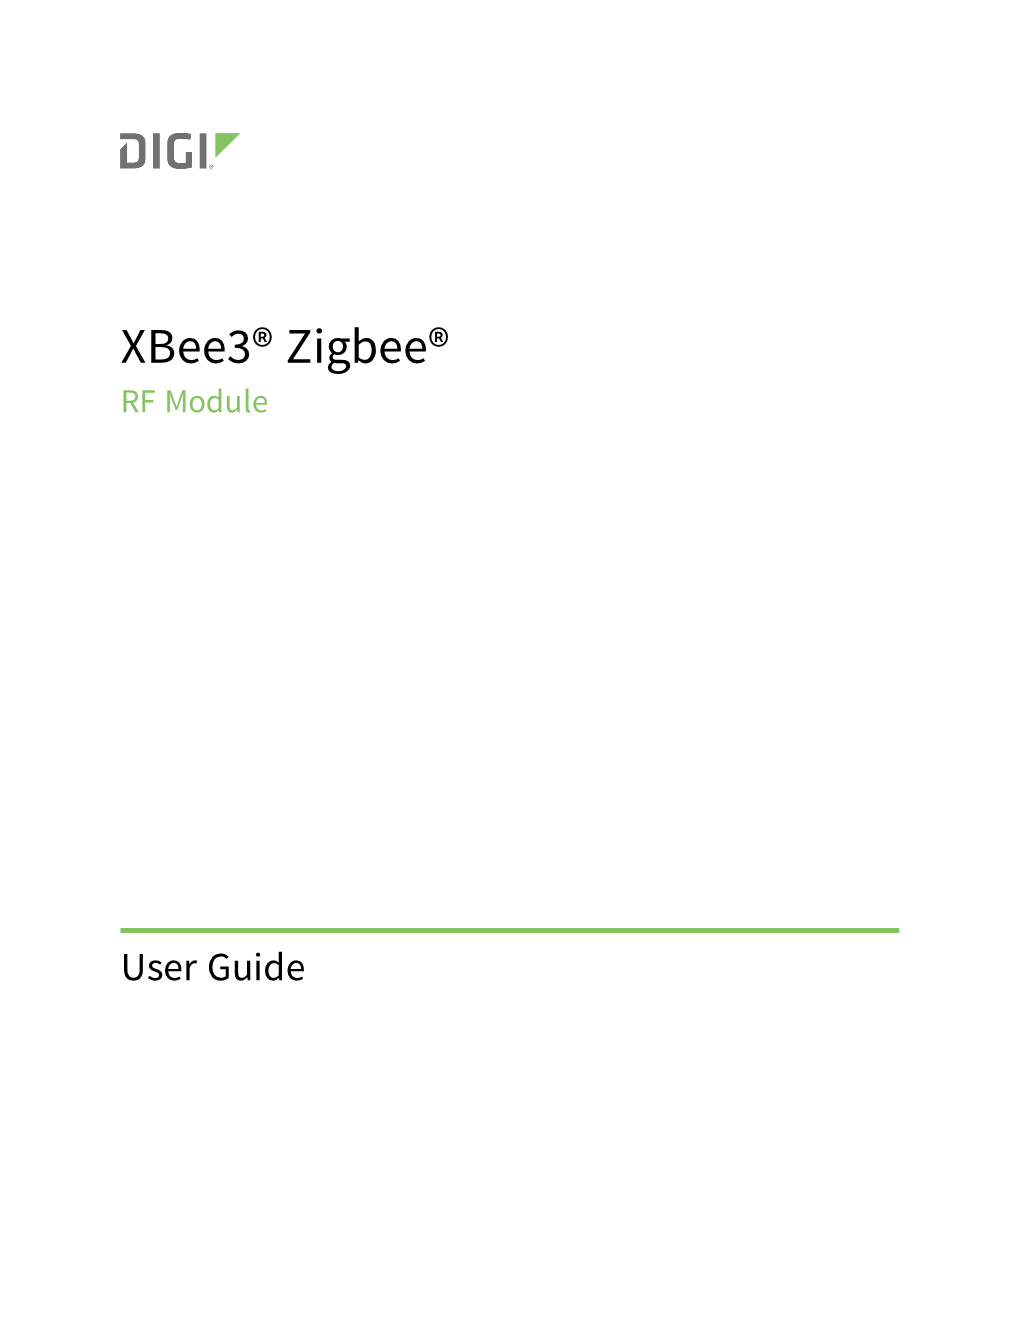 Xbee3® Zigbee® RF Module User Guide 2 Contents